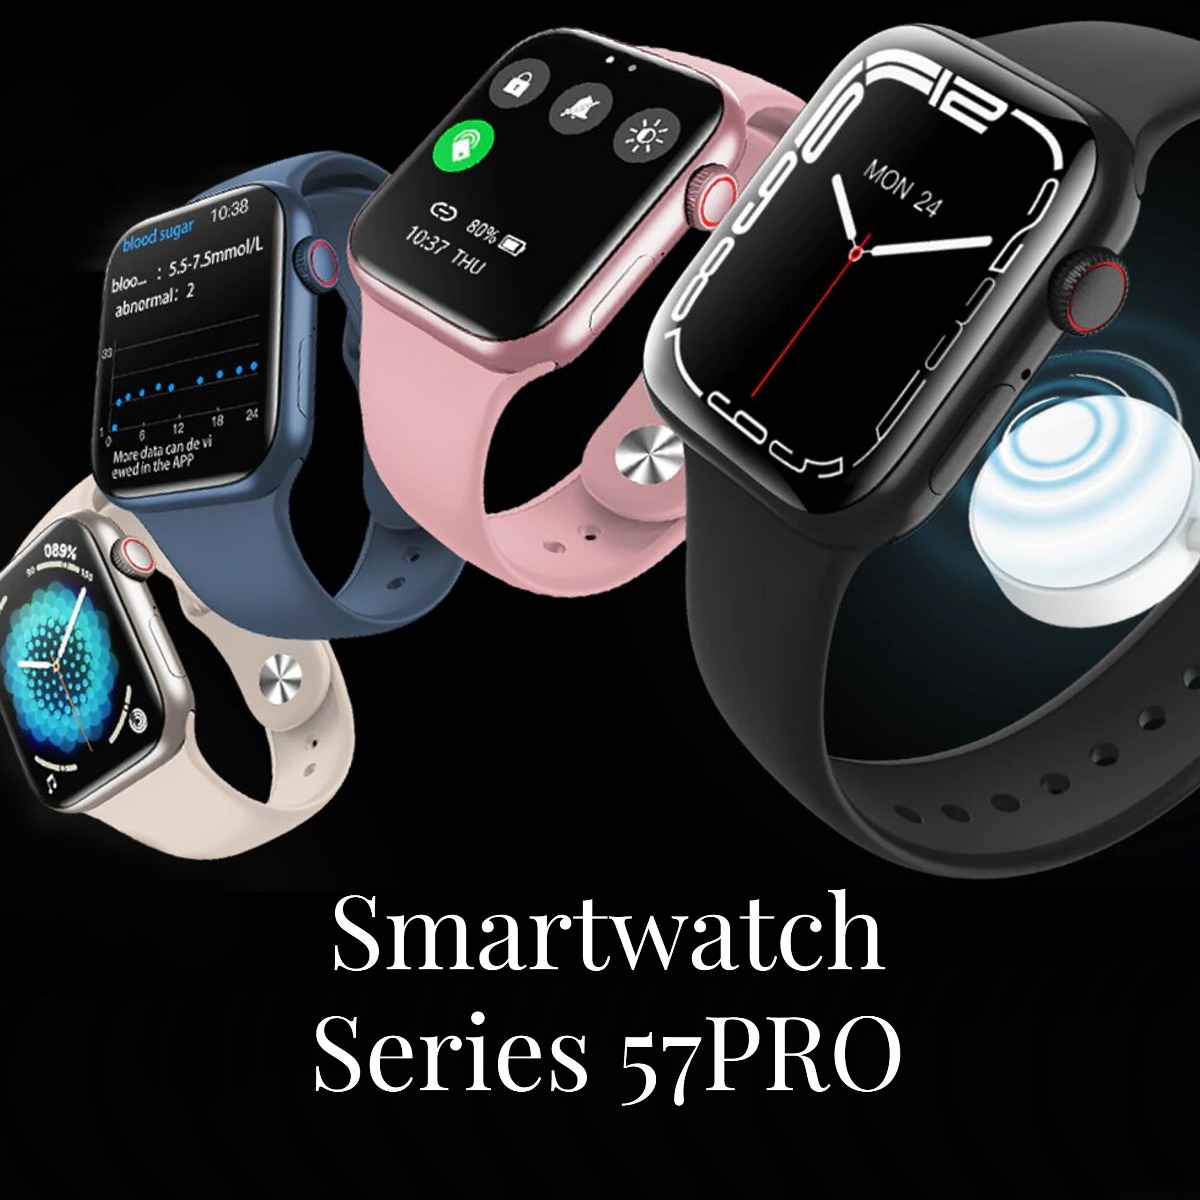 Smartwatch Series 57pro